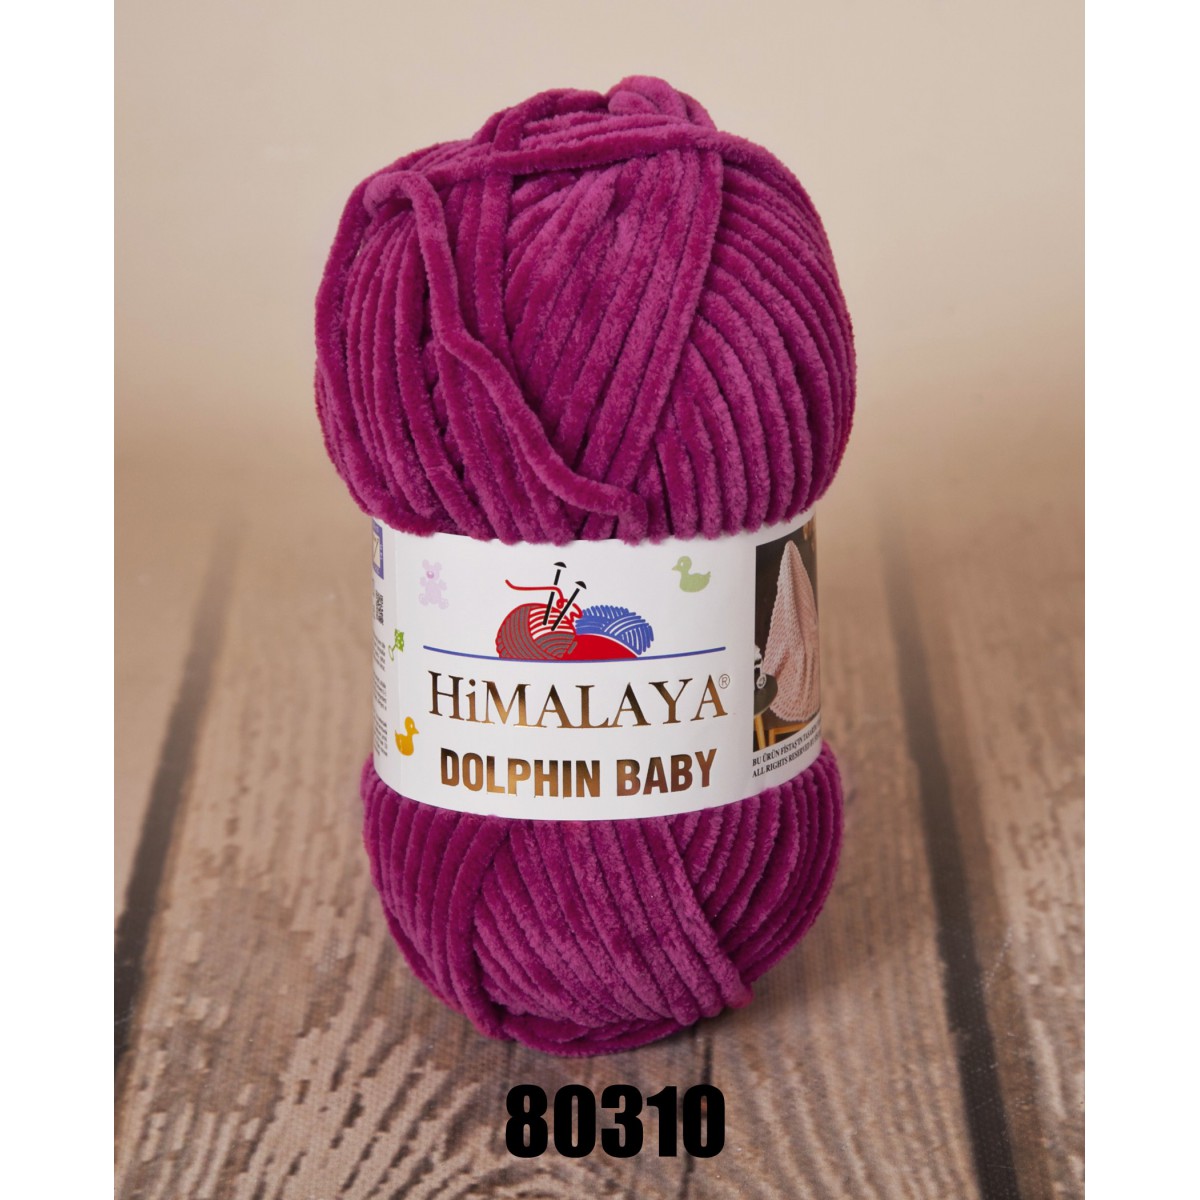 HIMALAYA yarn - DOLPHIN BABY 80310a